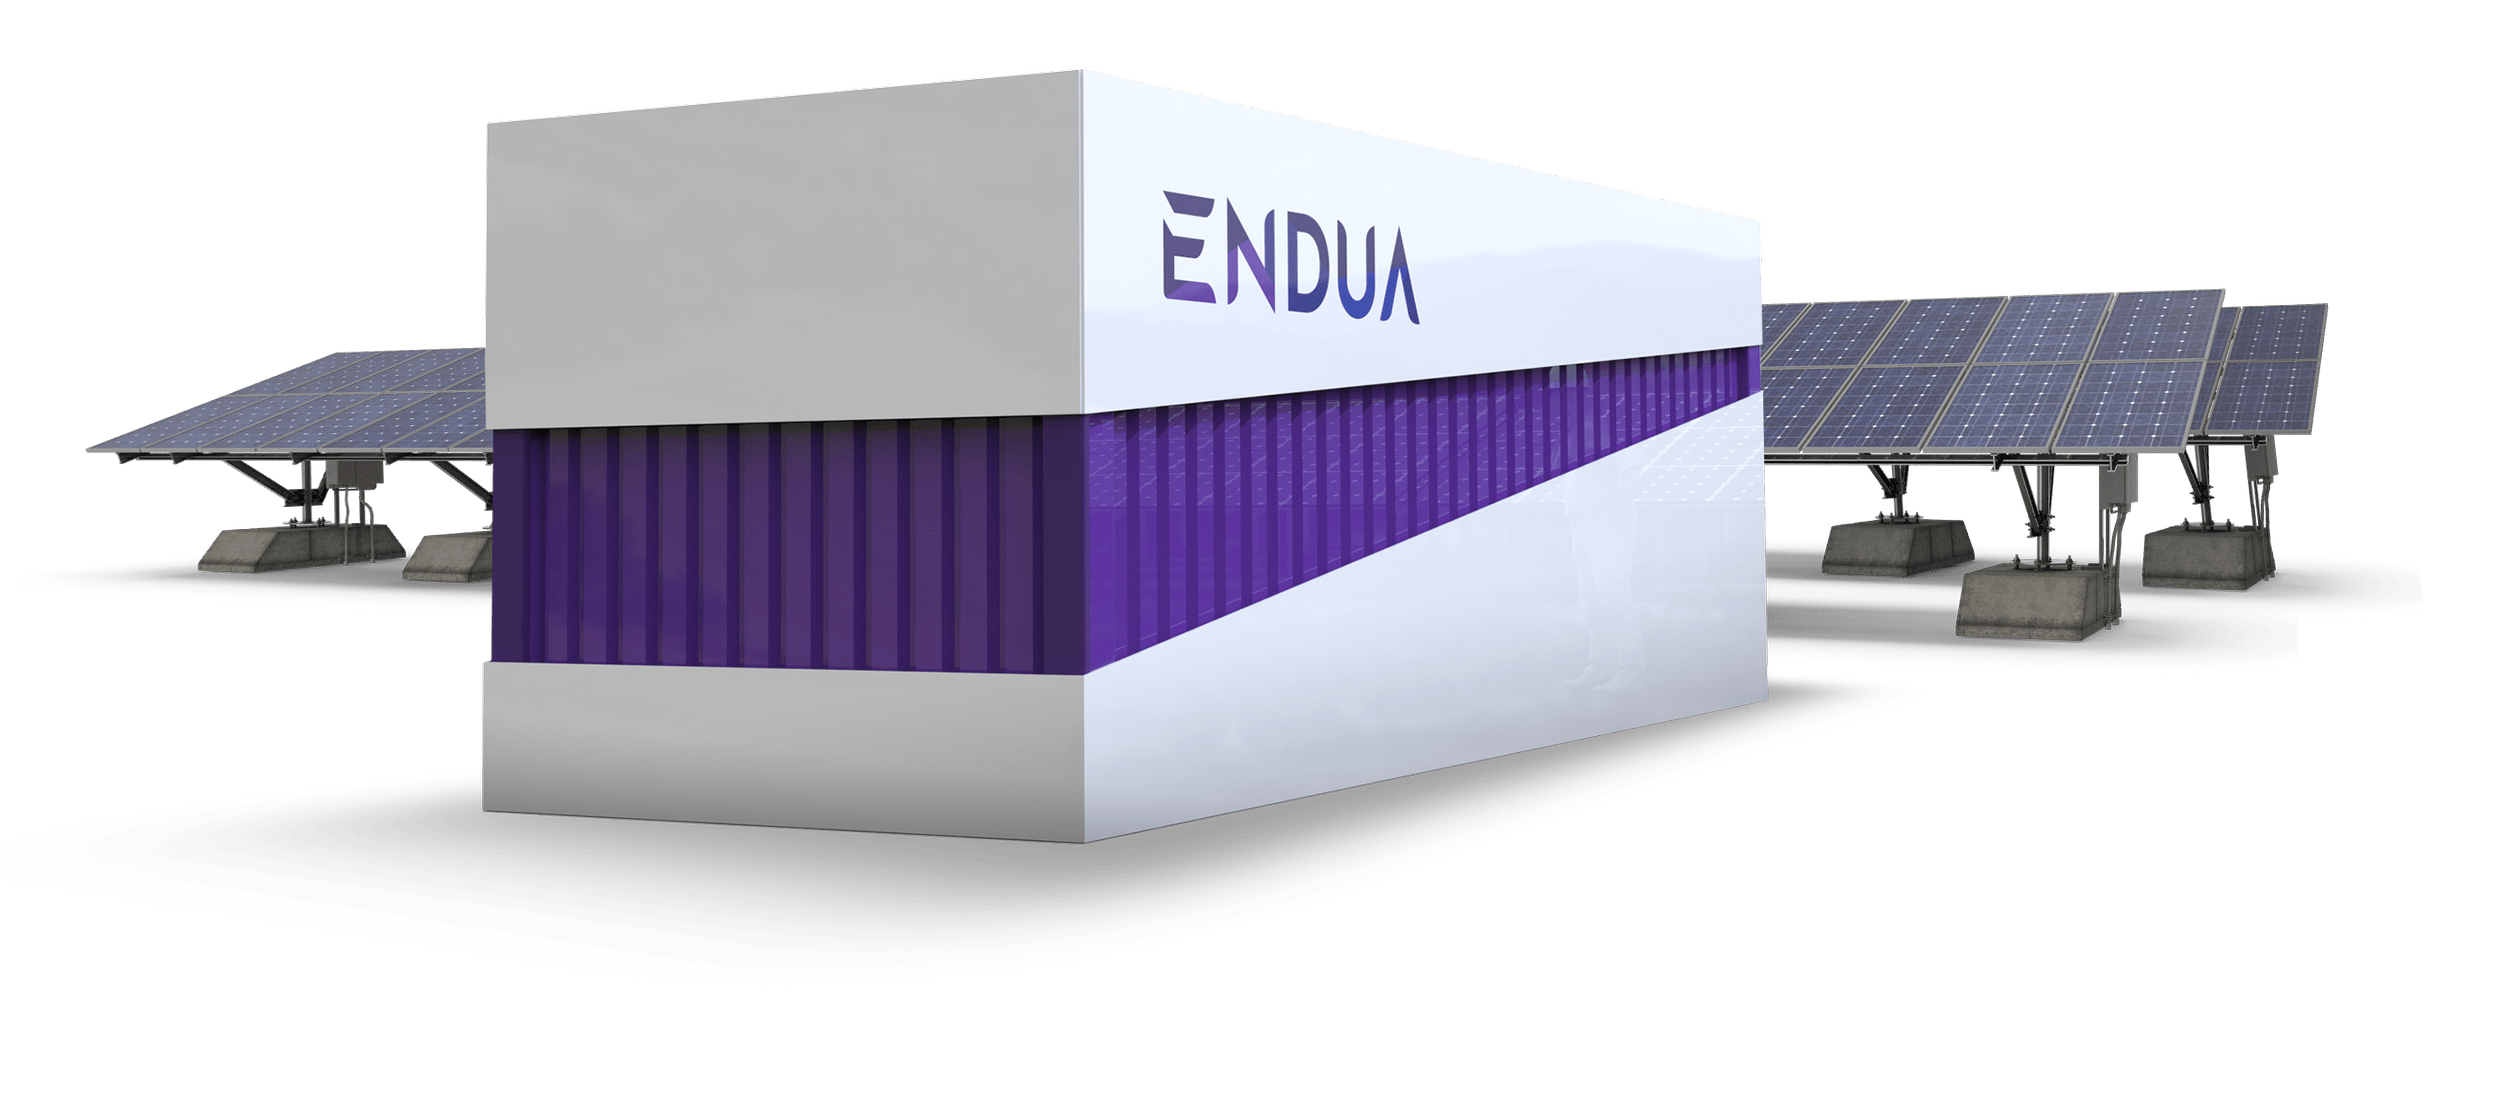 One of Endua's hydrogen banks